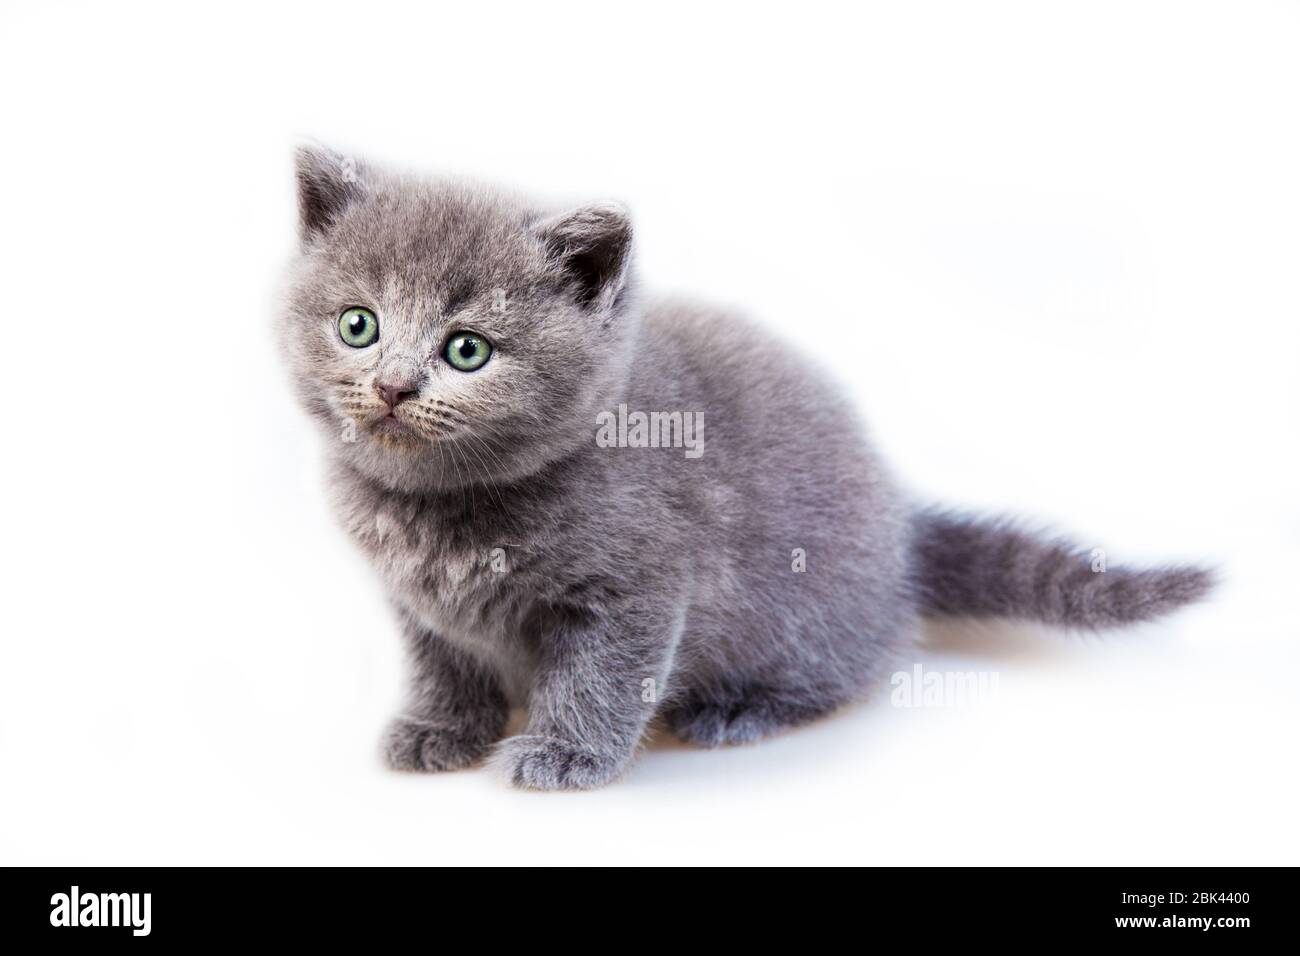 small gray kitten